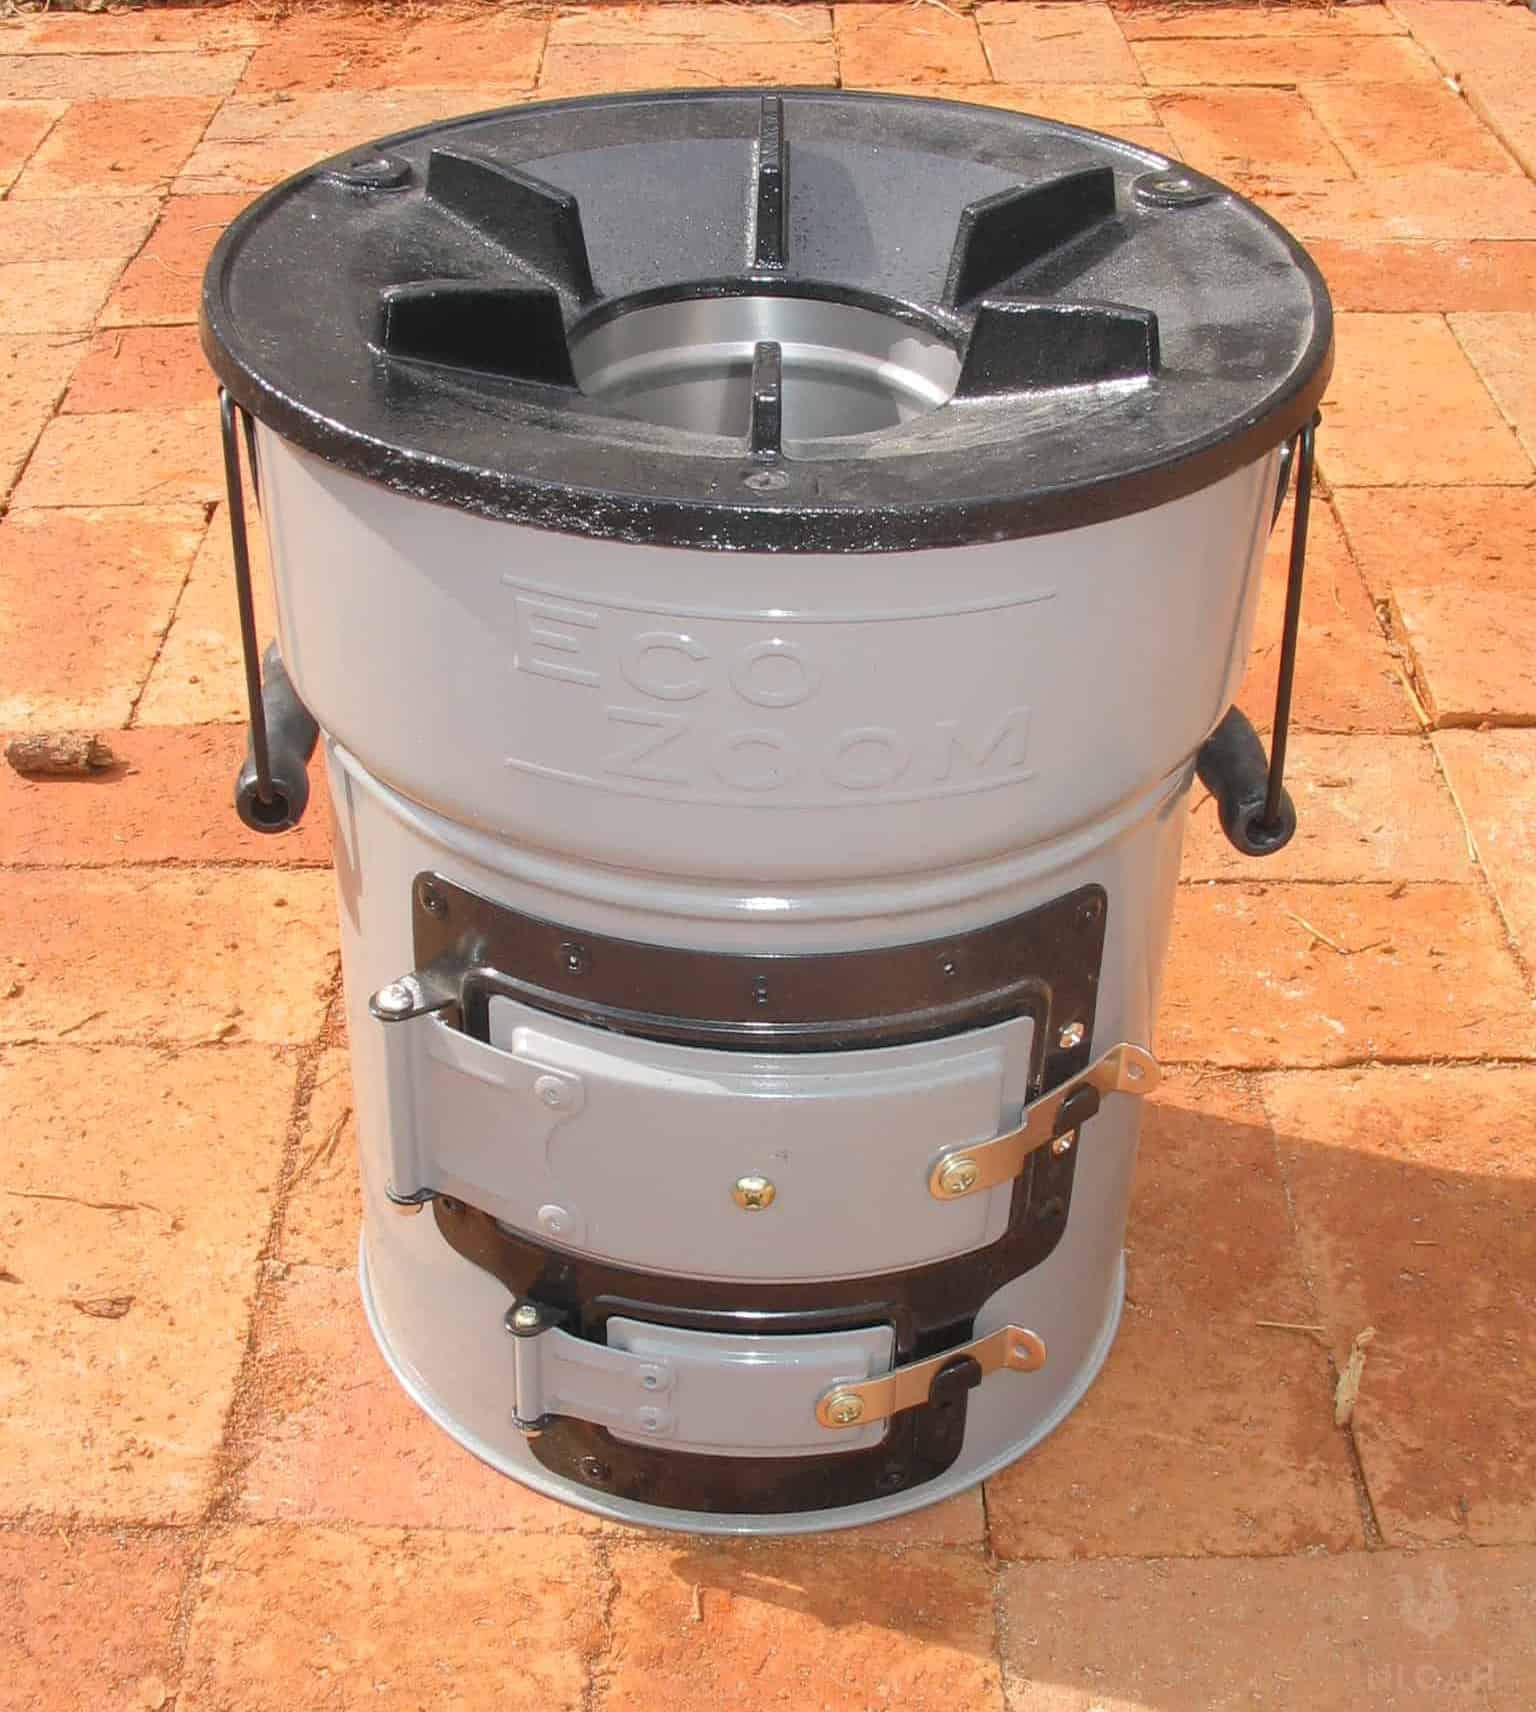 an EcoZoom rocket stove